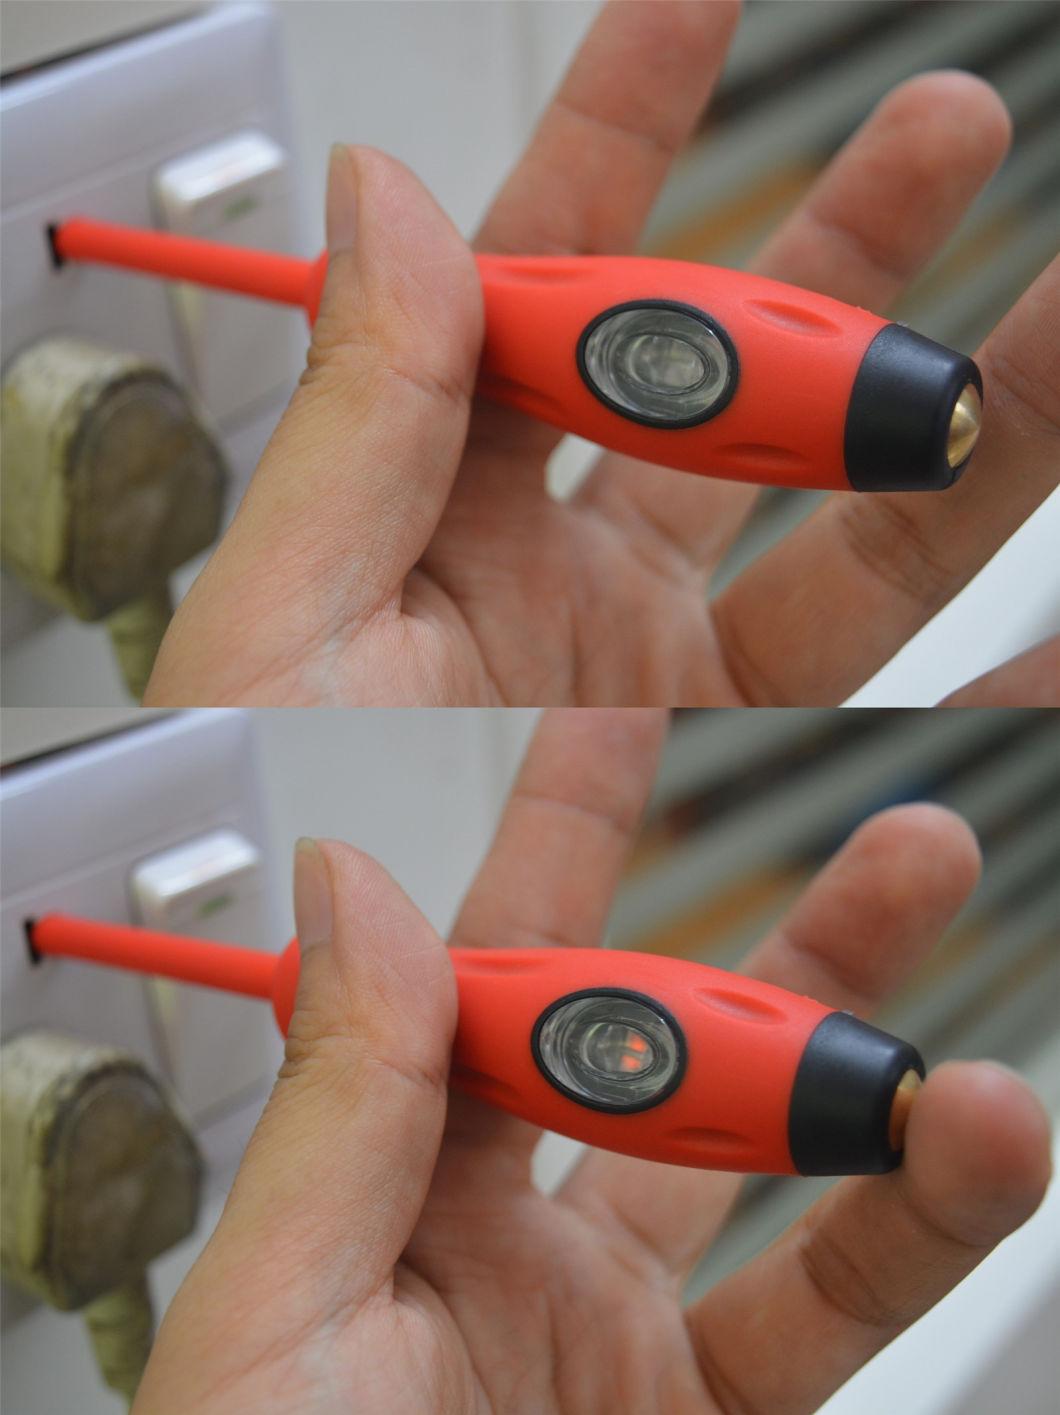 100-500V 3mm*65mm Voltage Tester Pencil/Electric Tester Pen / Insulated Screwdriver